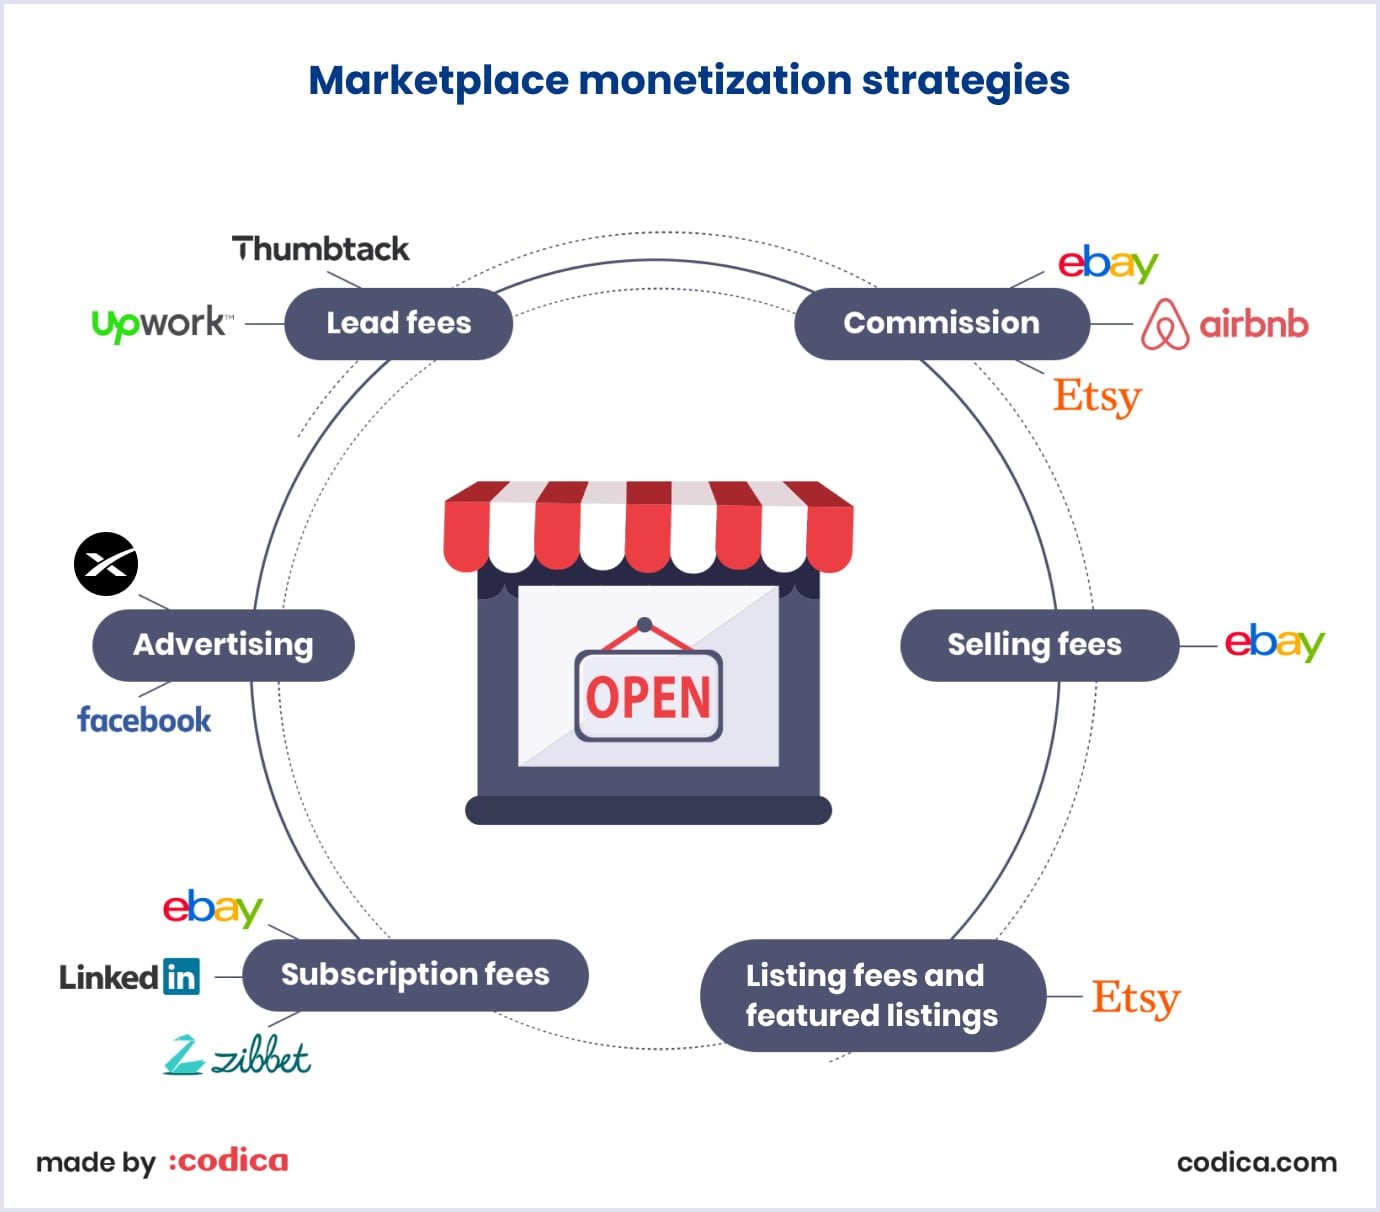 Marketplace monetization strategies